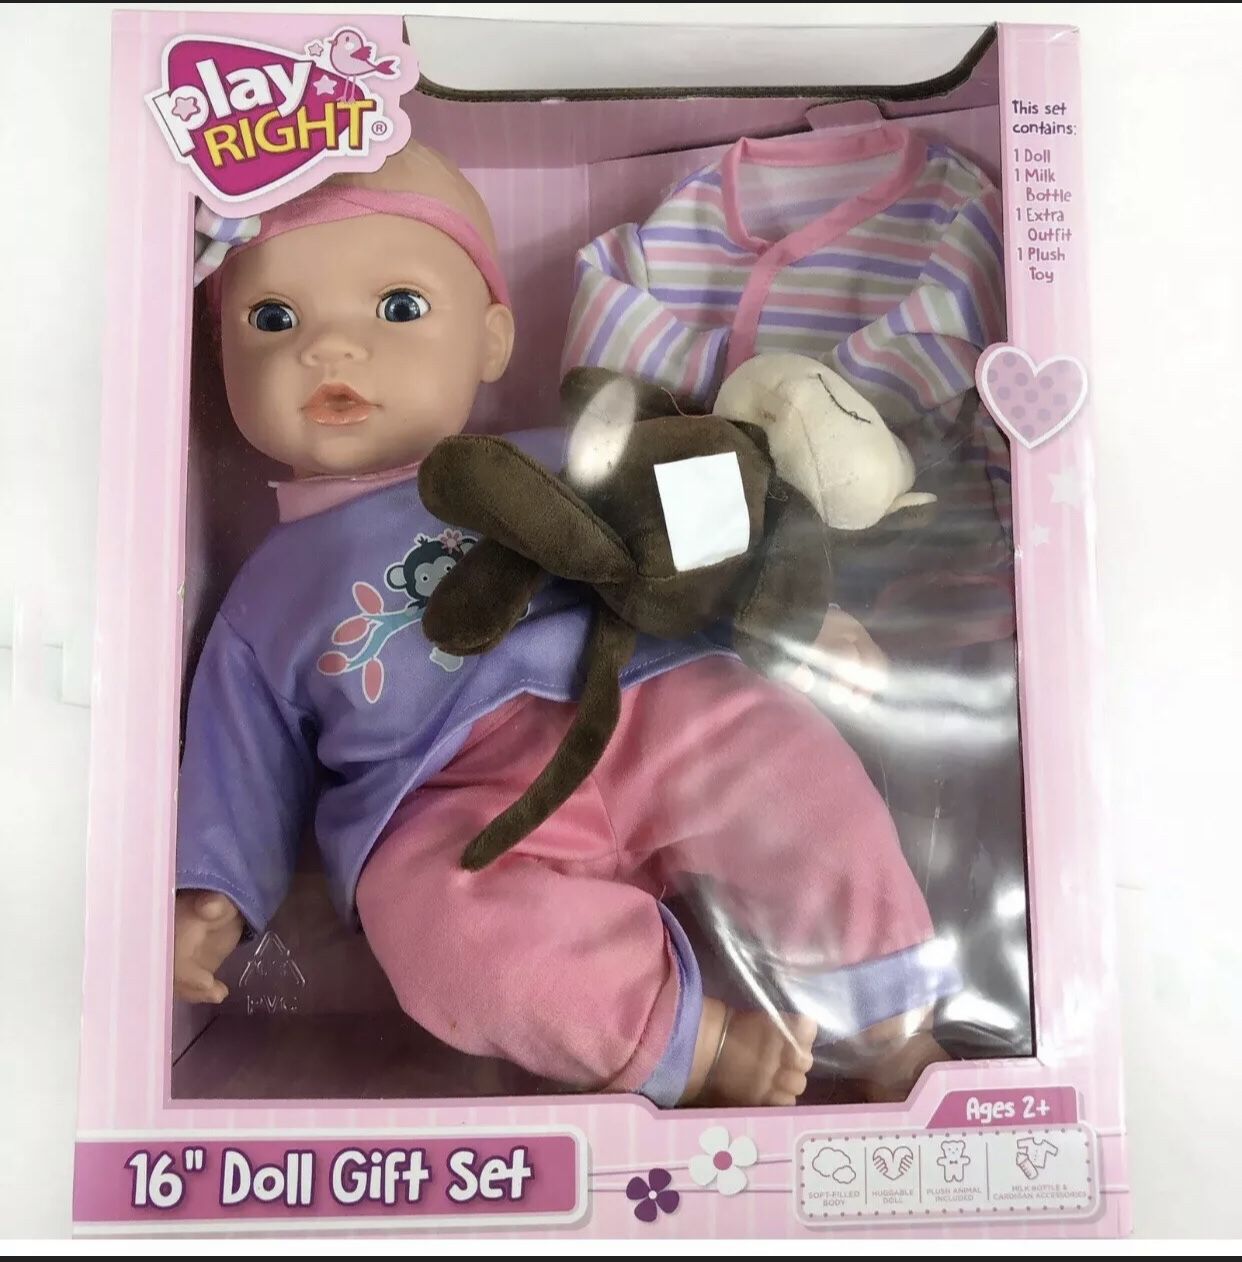 16” Doll Gift Set